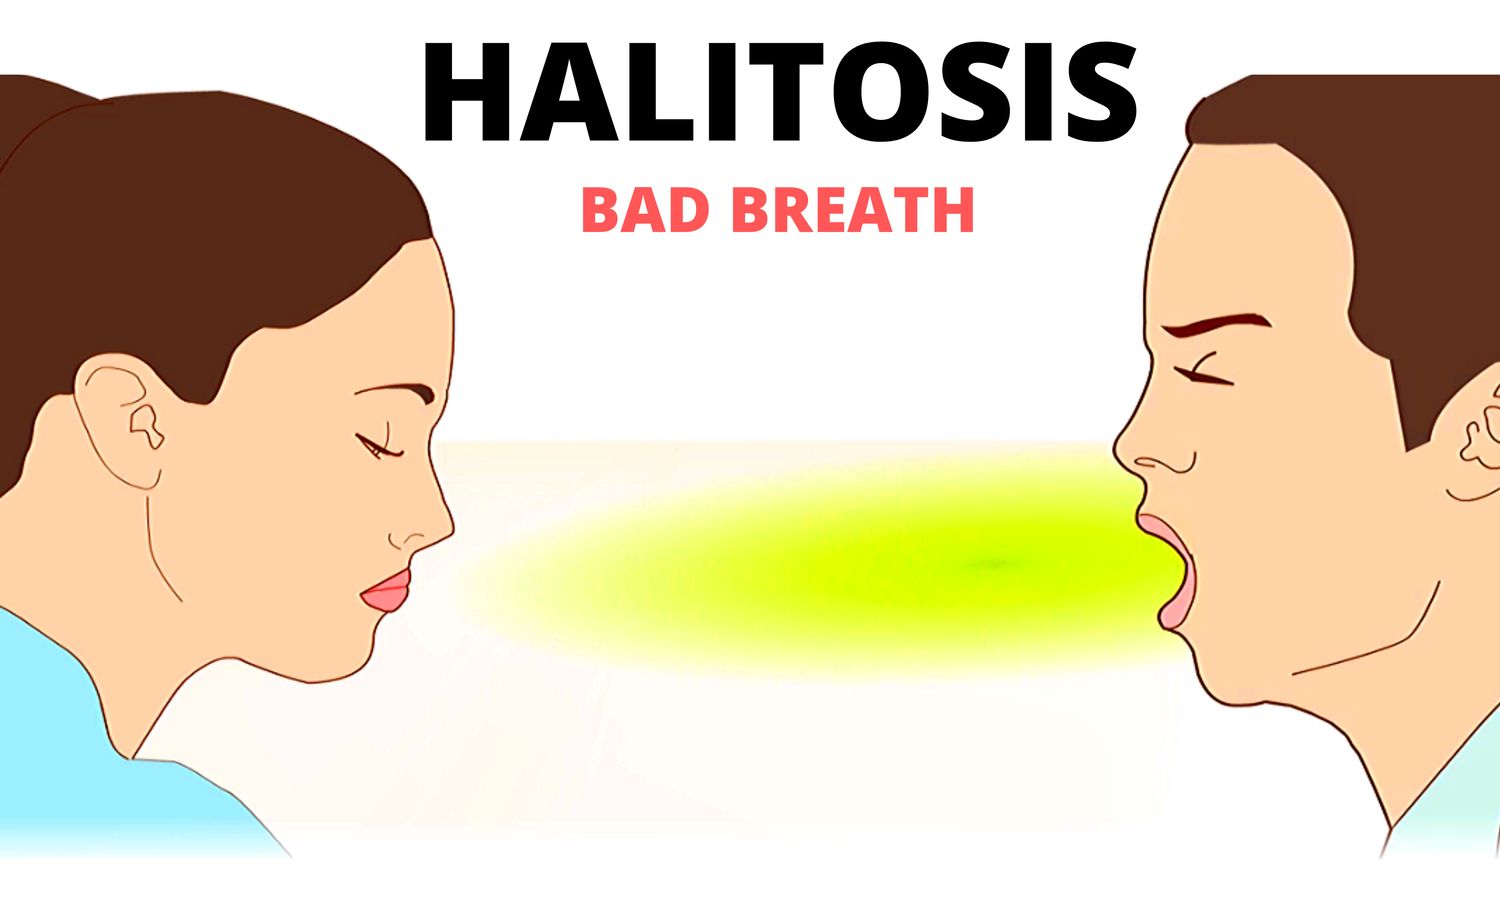 HALITOSIS- BAD BREATH